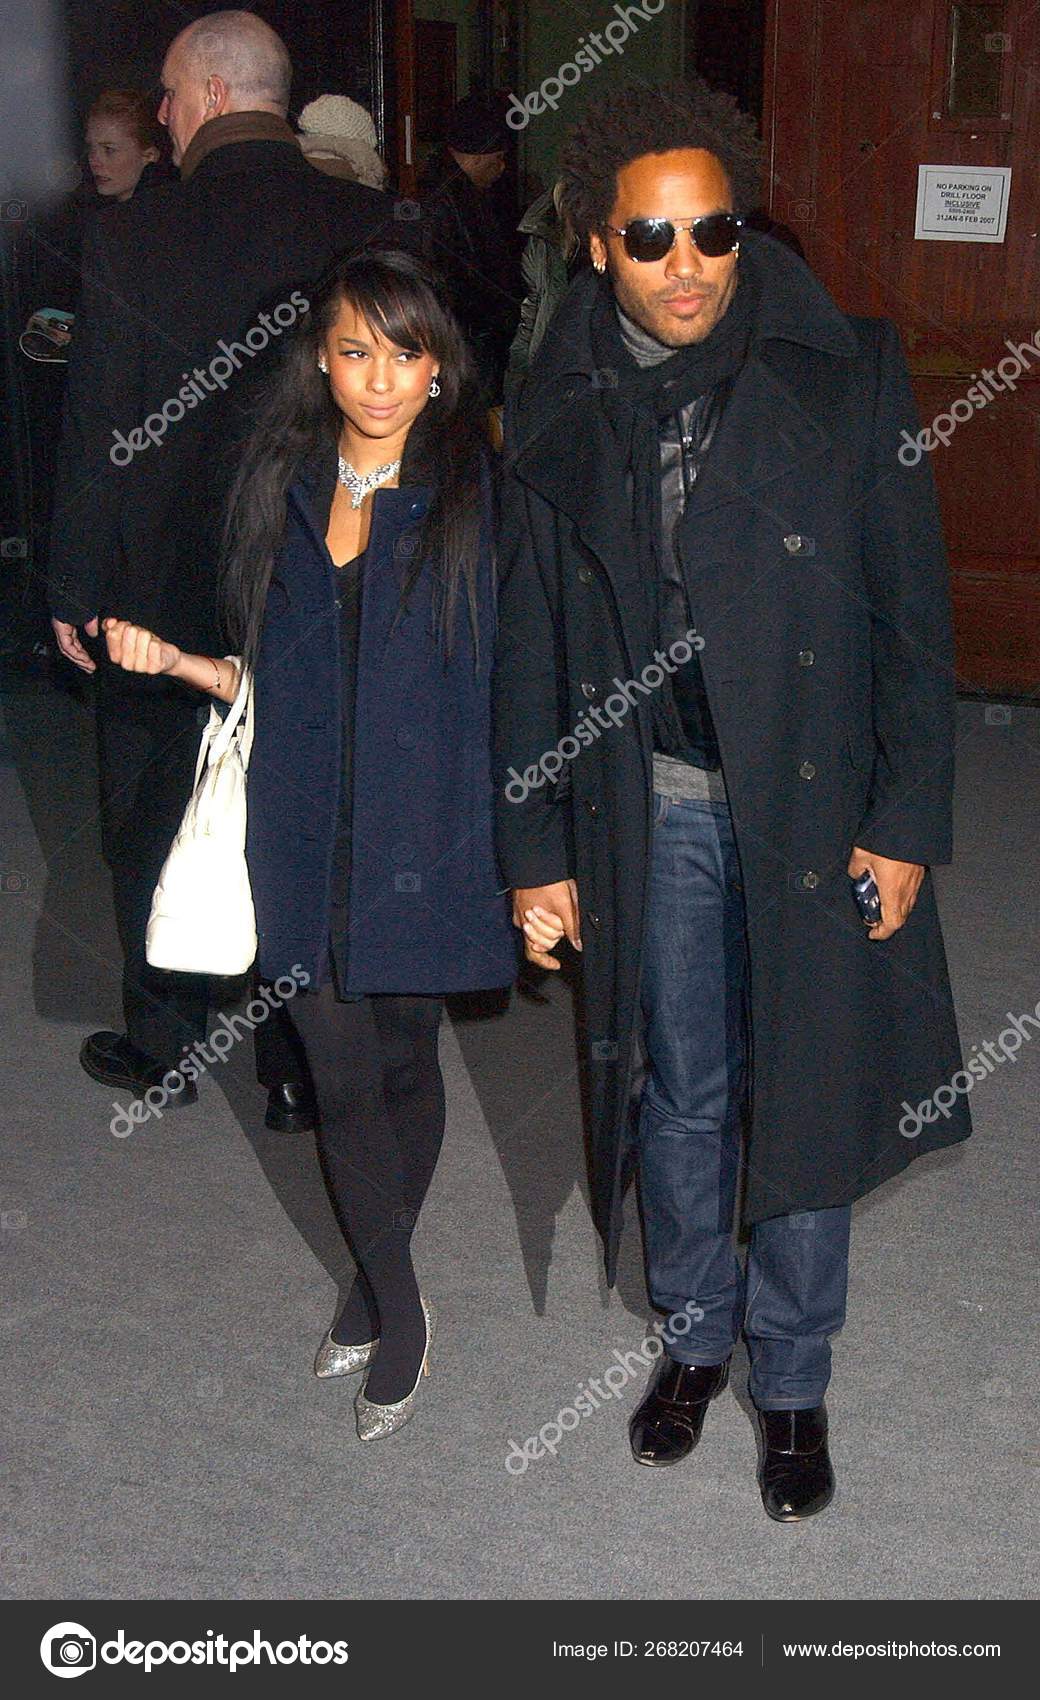 Kanye West and girlfriend during Olympus Fashion Week Spring 2007